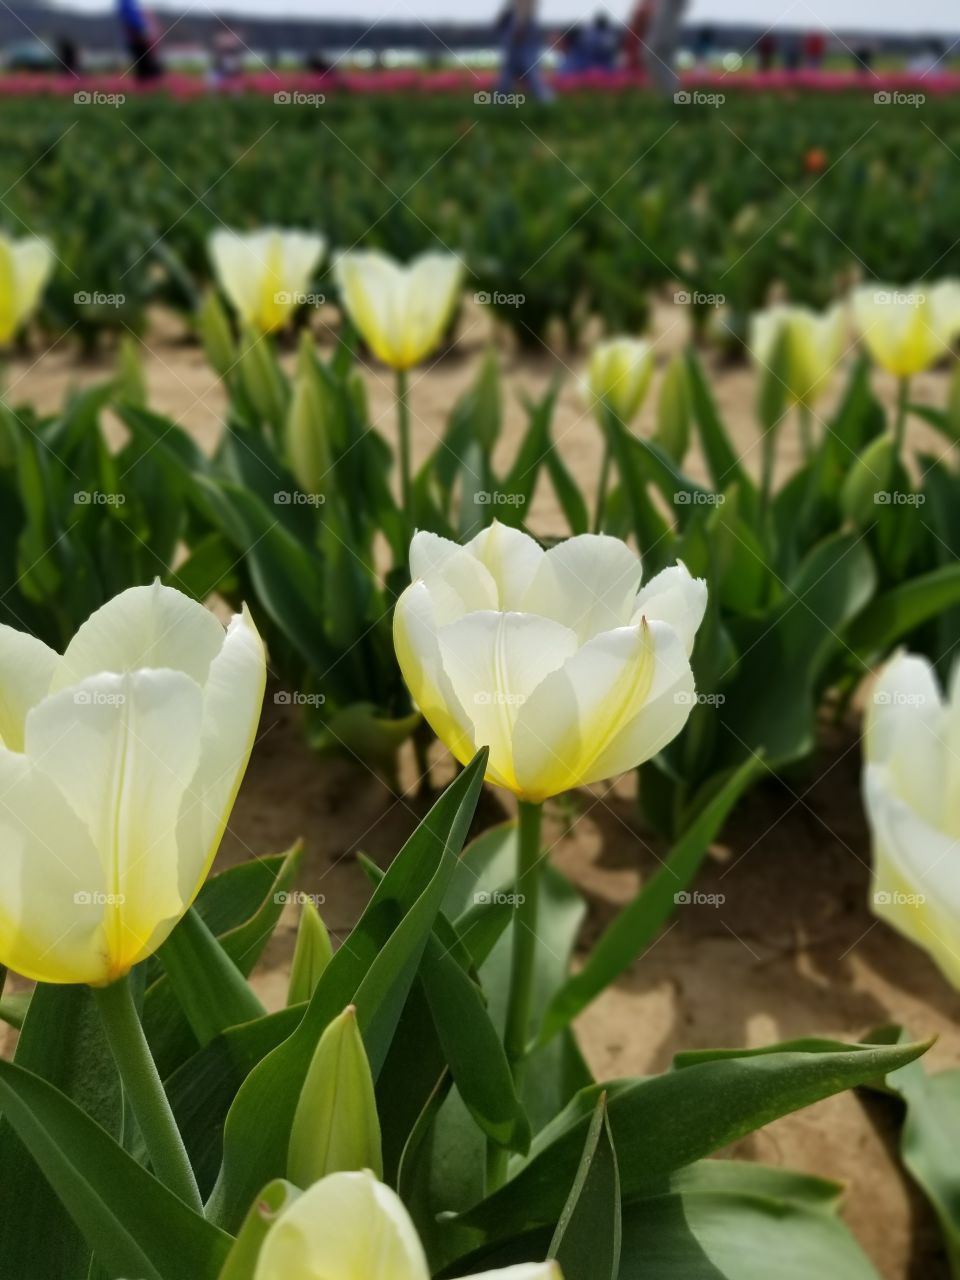 Tulips Festival, NJ